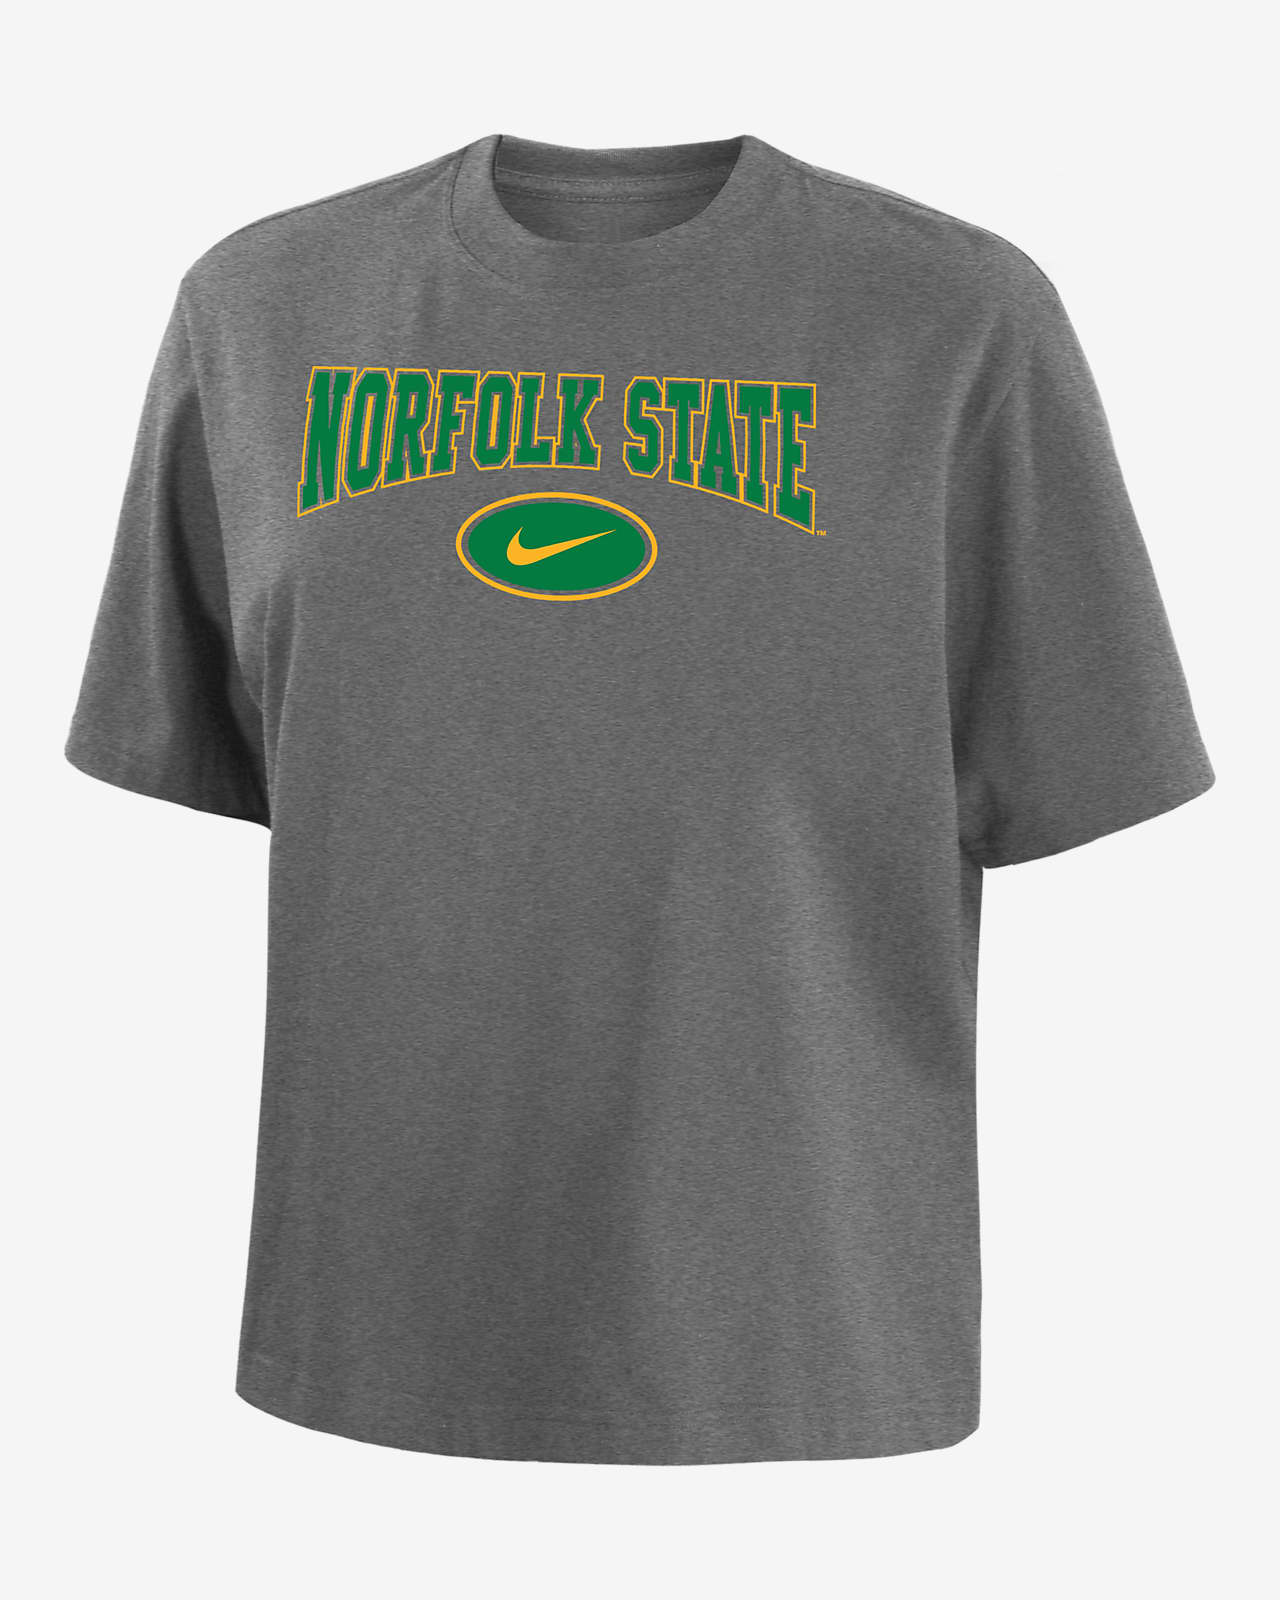 Norfolk State Women's Nike College Boxy T-Shirt